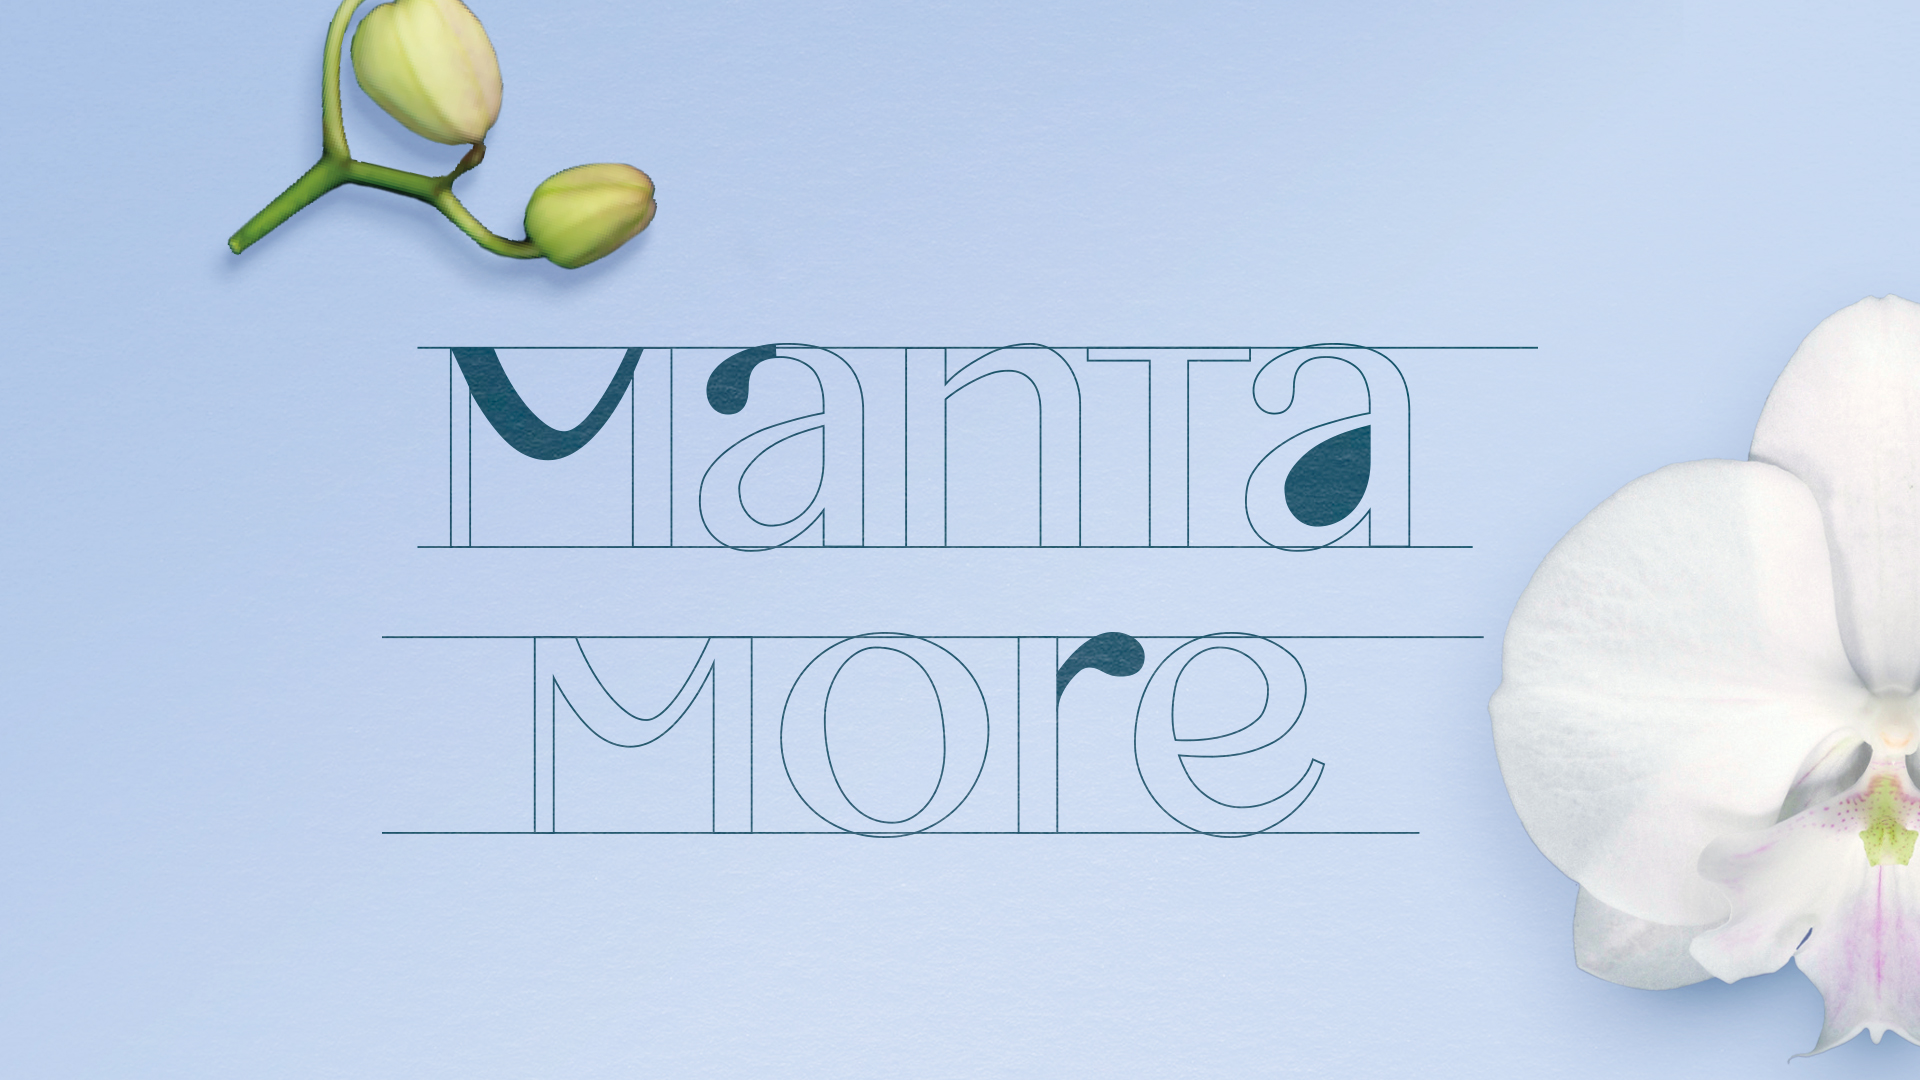 MANTA MORE brand identity